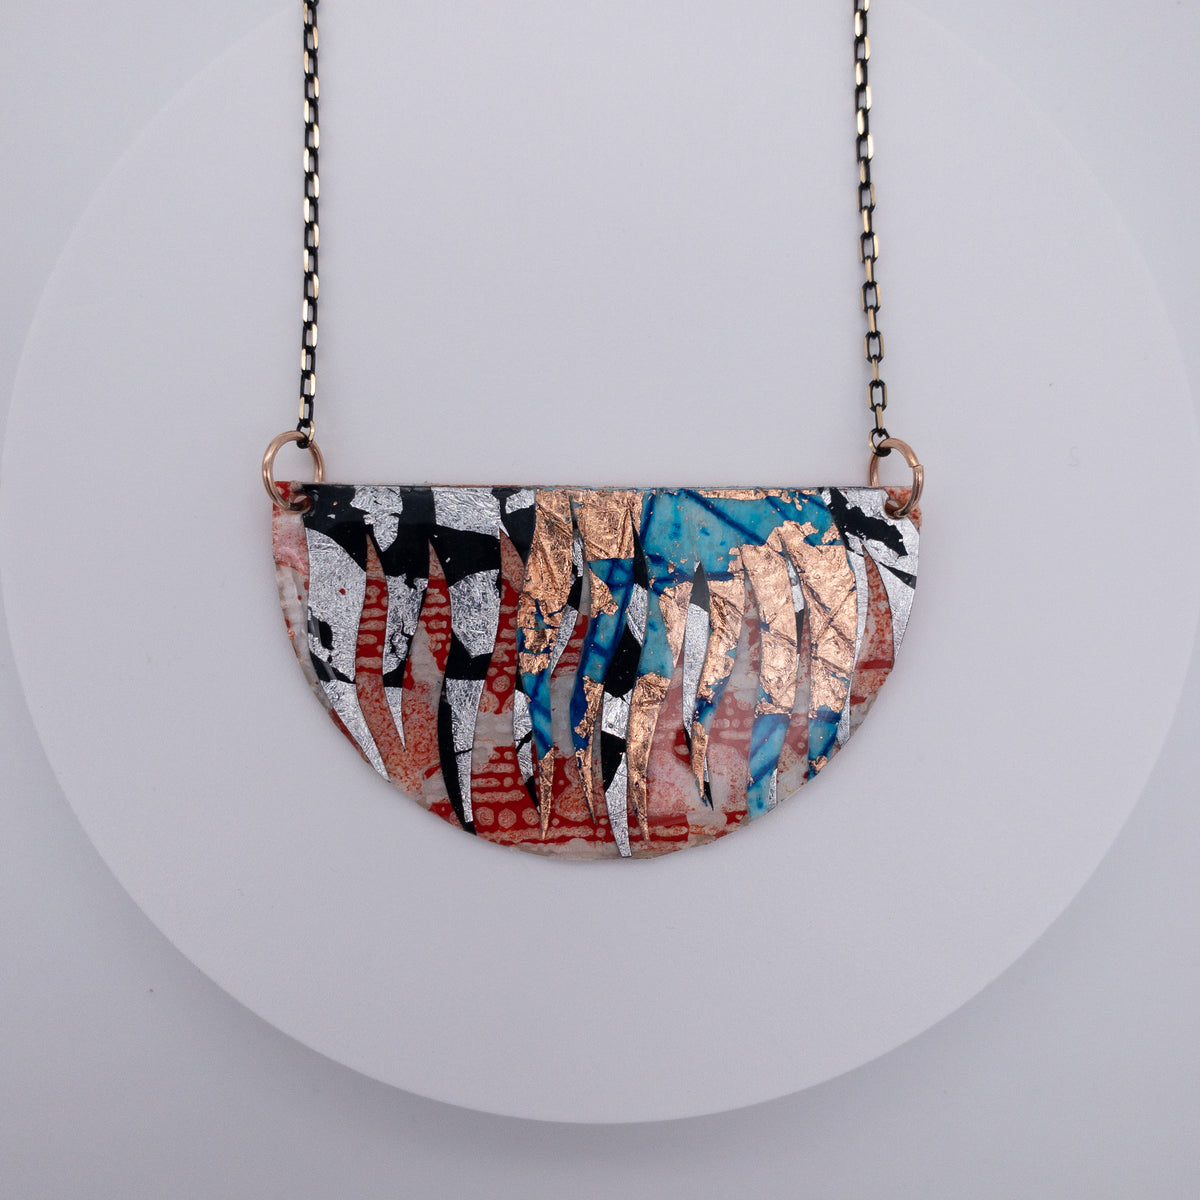 Bláth batik textile necklace in orange/copper/silver/blue/black